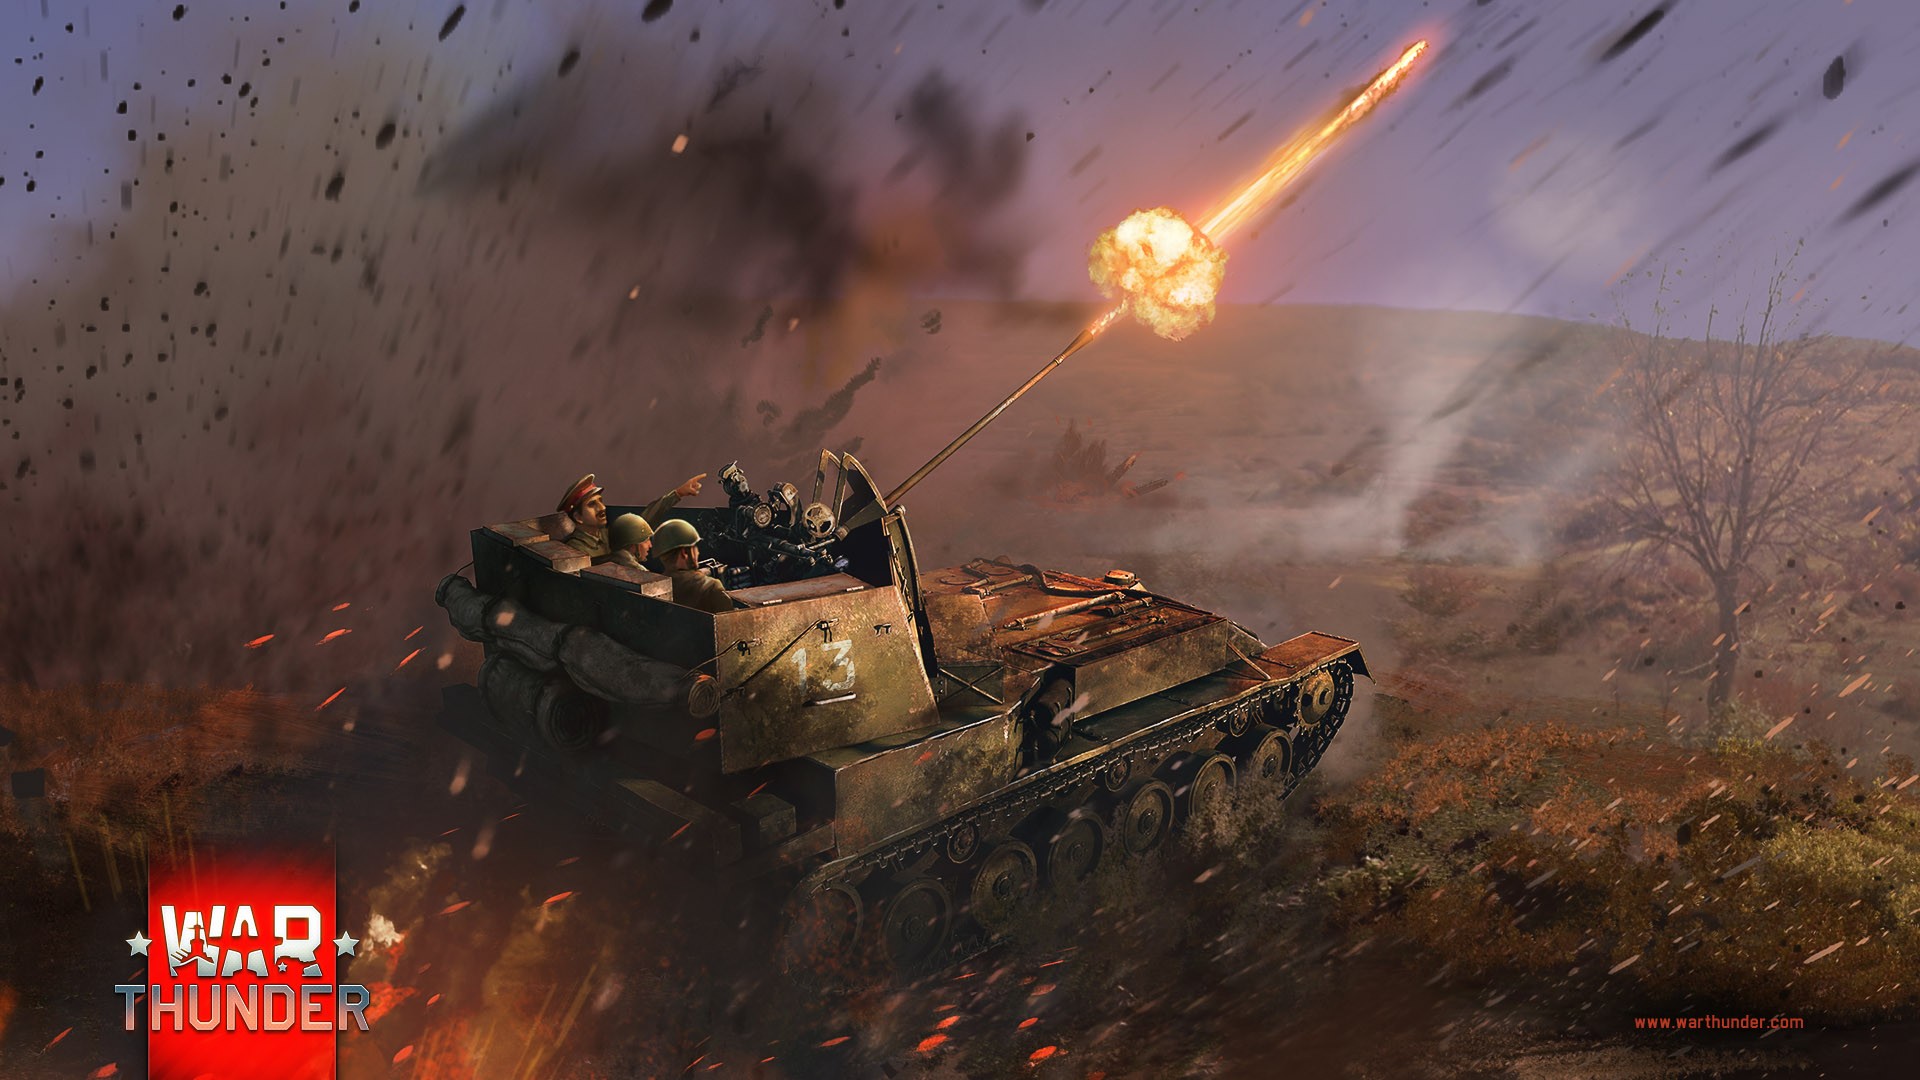 General 1920x1080 War Thunder tank Gaijin Entertainment video games PC gaming military military vehicle vehicle video game art